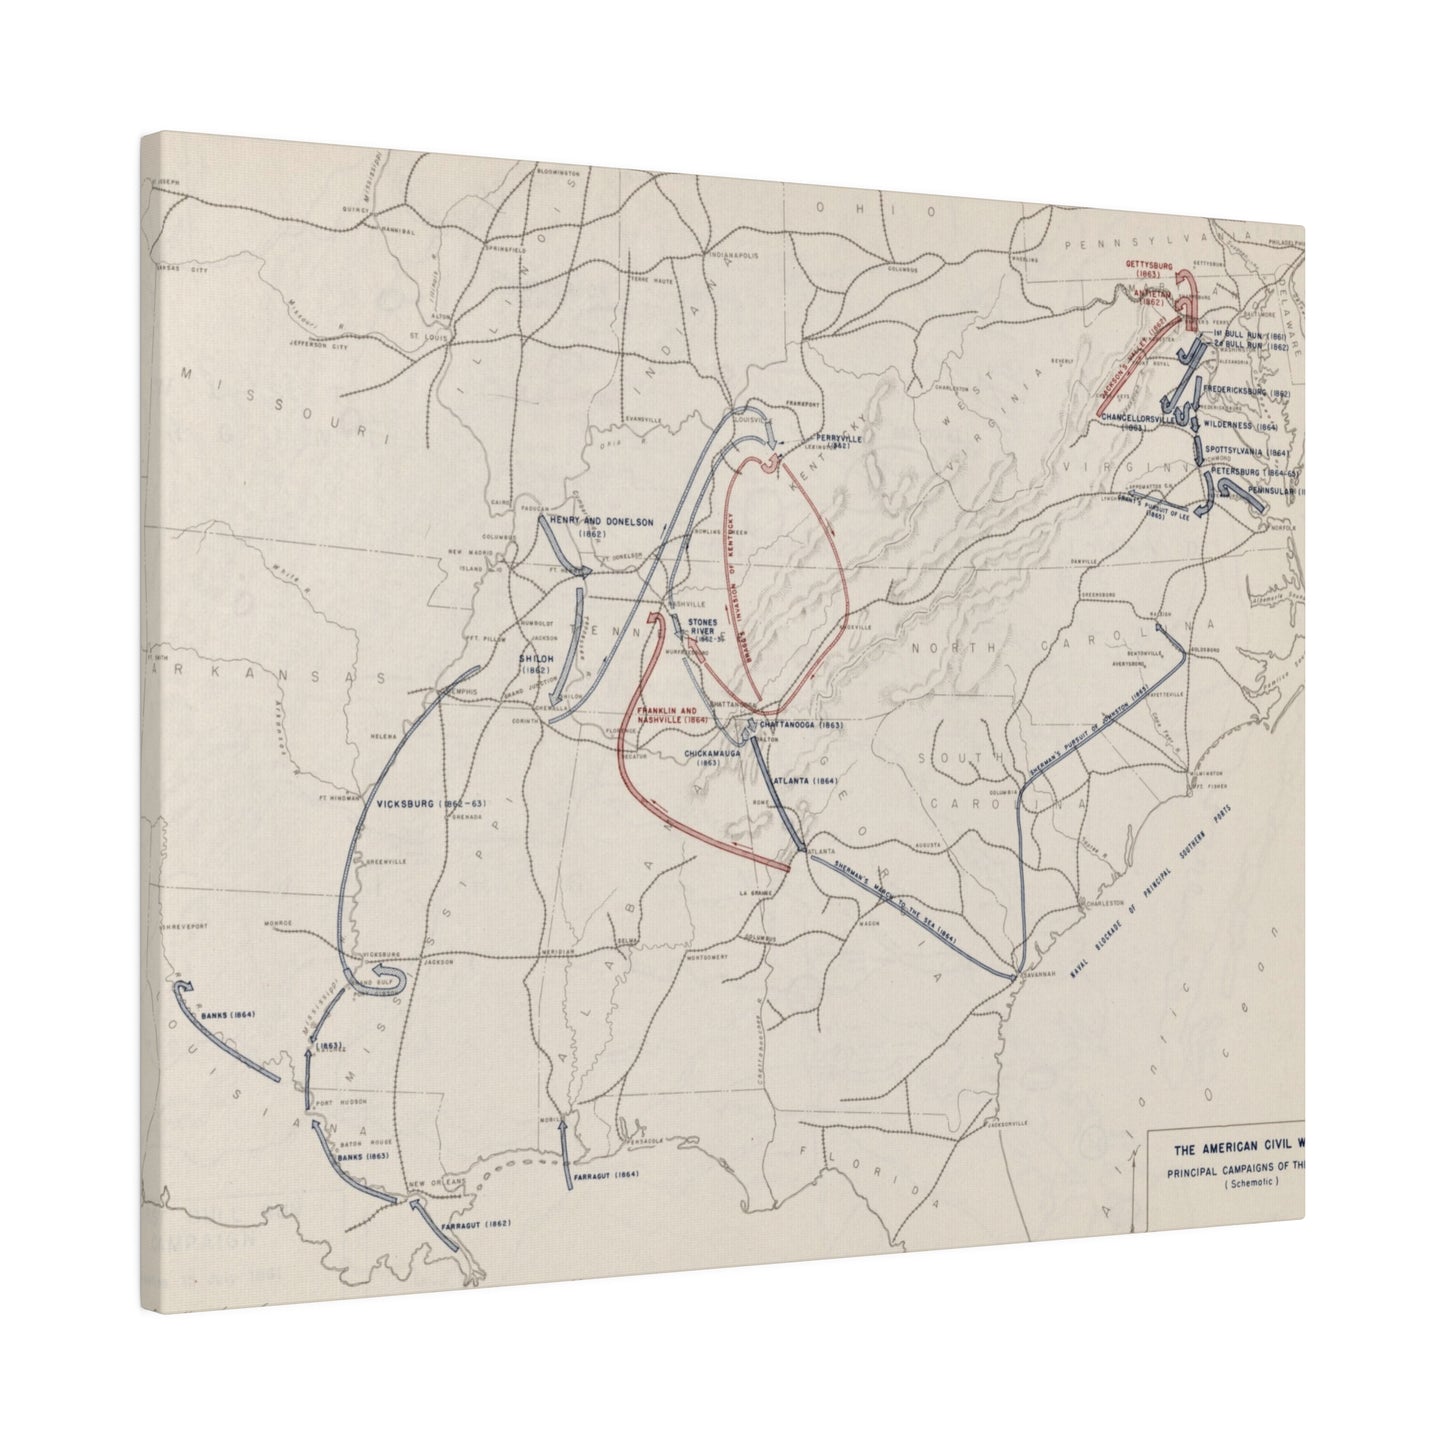 American Civil War_Operations_1861-1865